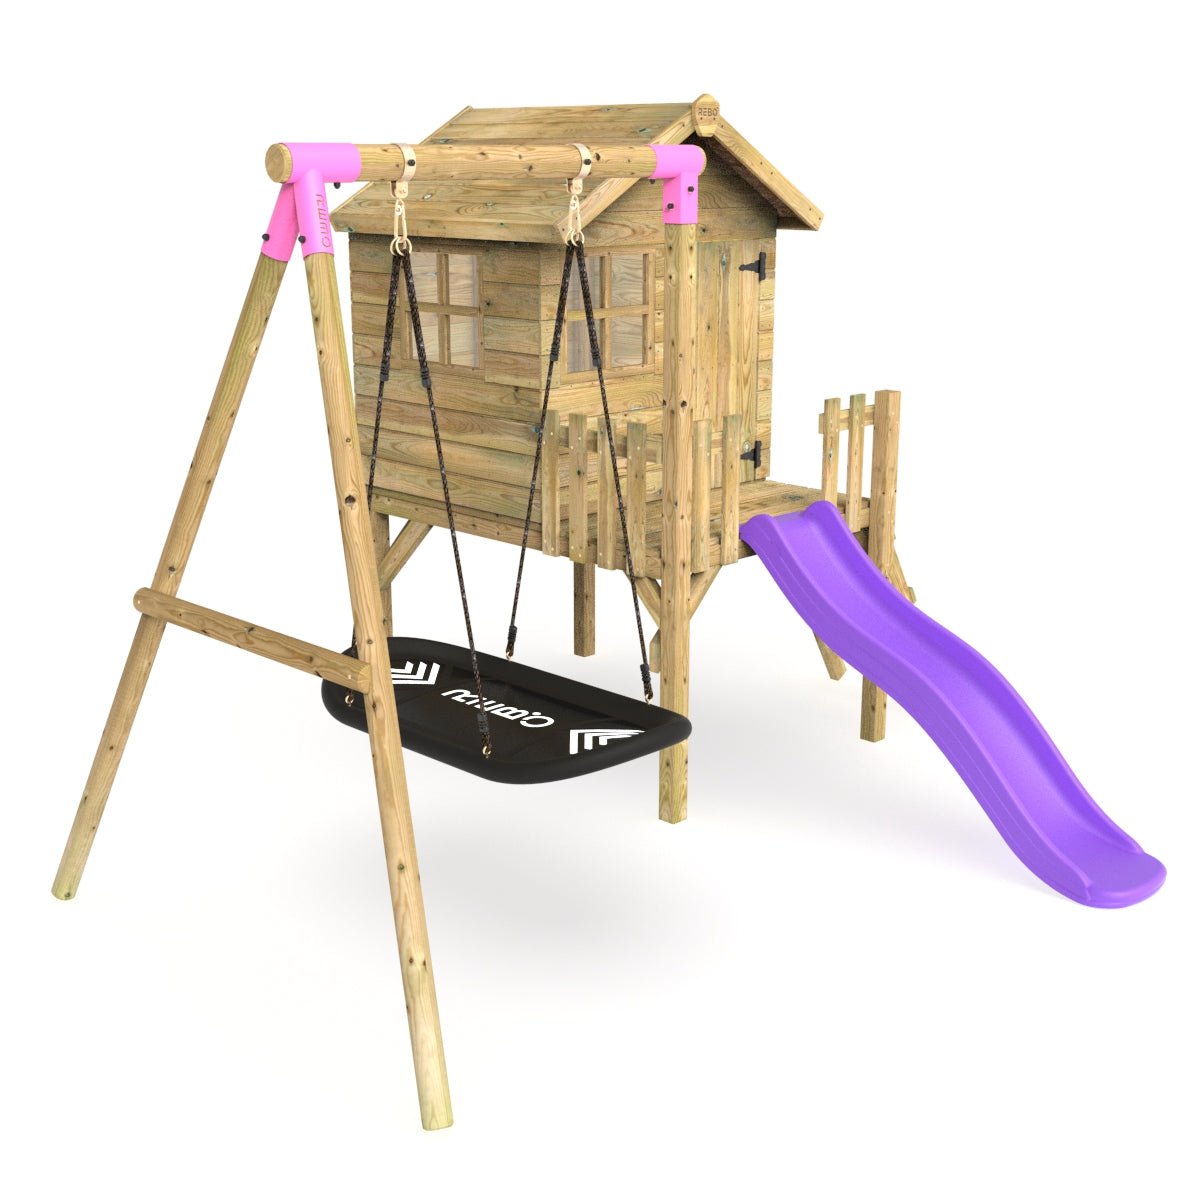 Rebo Orchard 4FT x 4FT Wooden Playhouse + Swings, 900mm Deck & 6FT Slide - Boat Purple